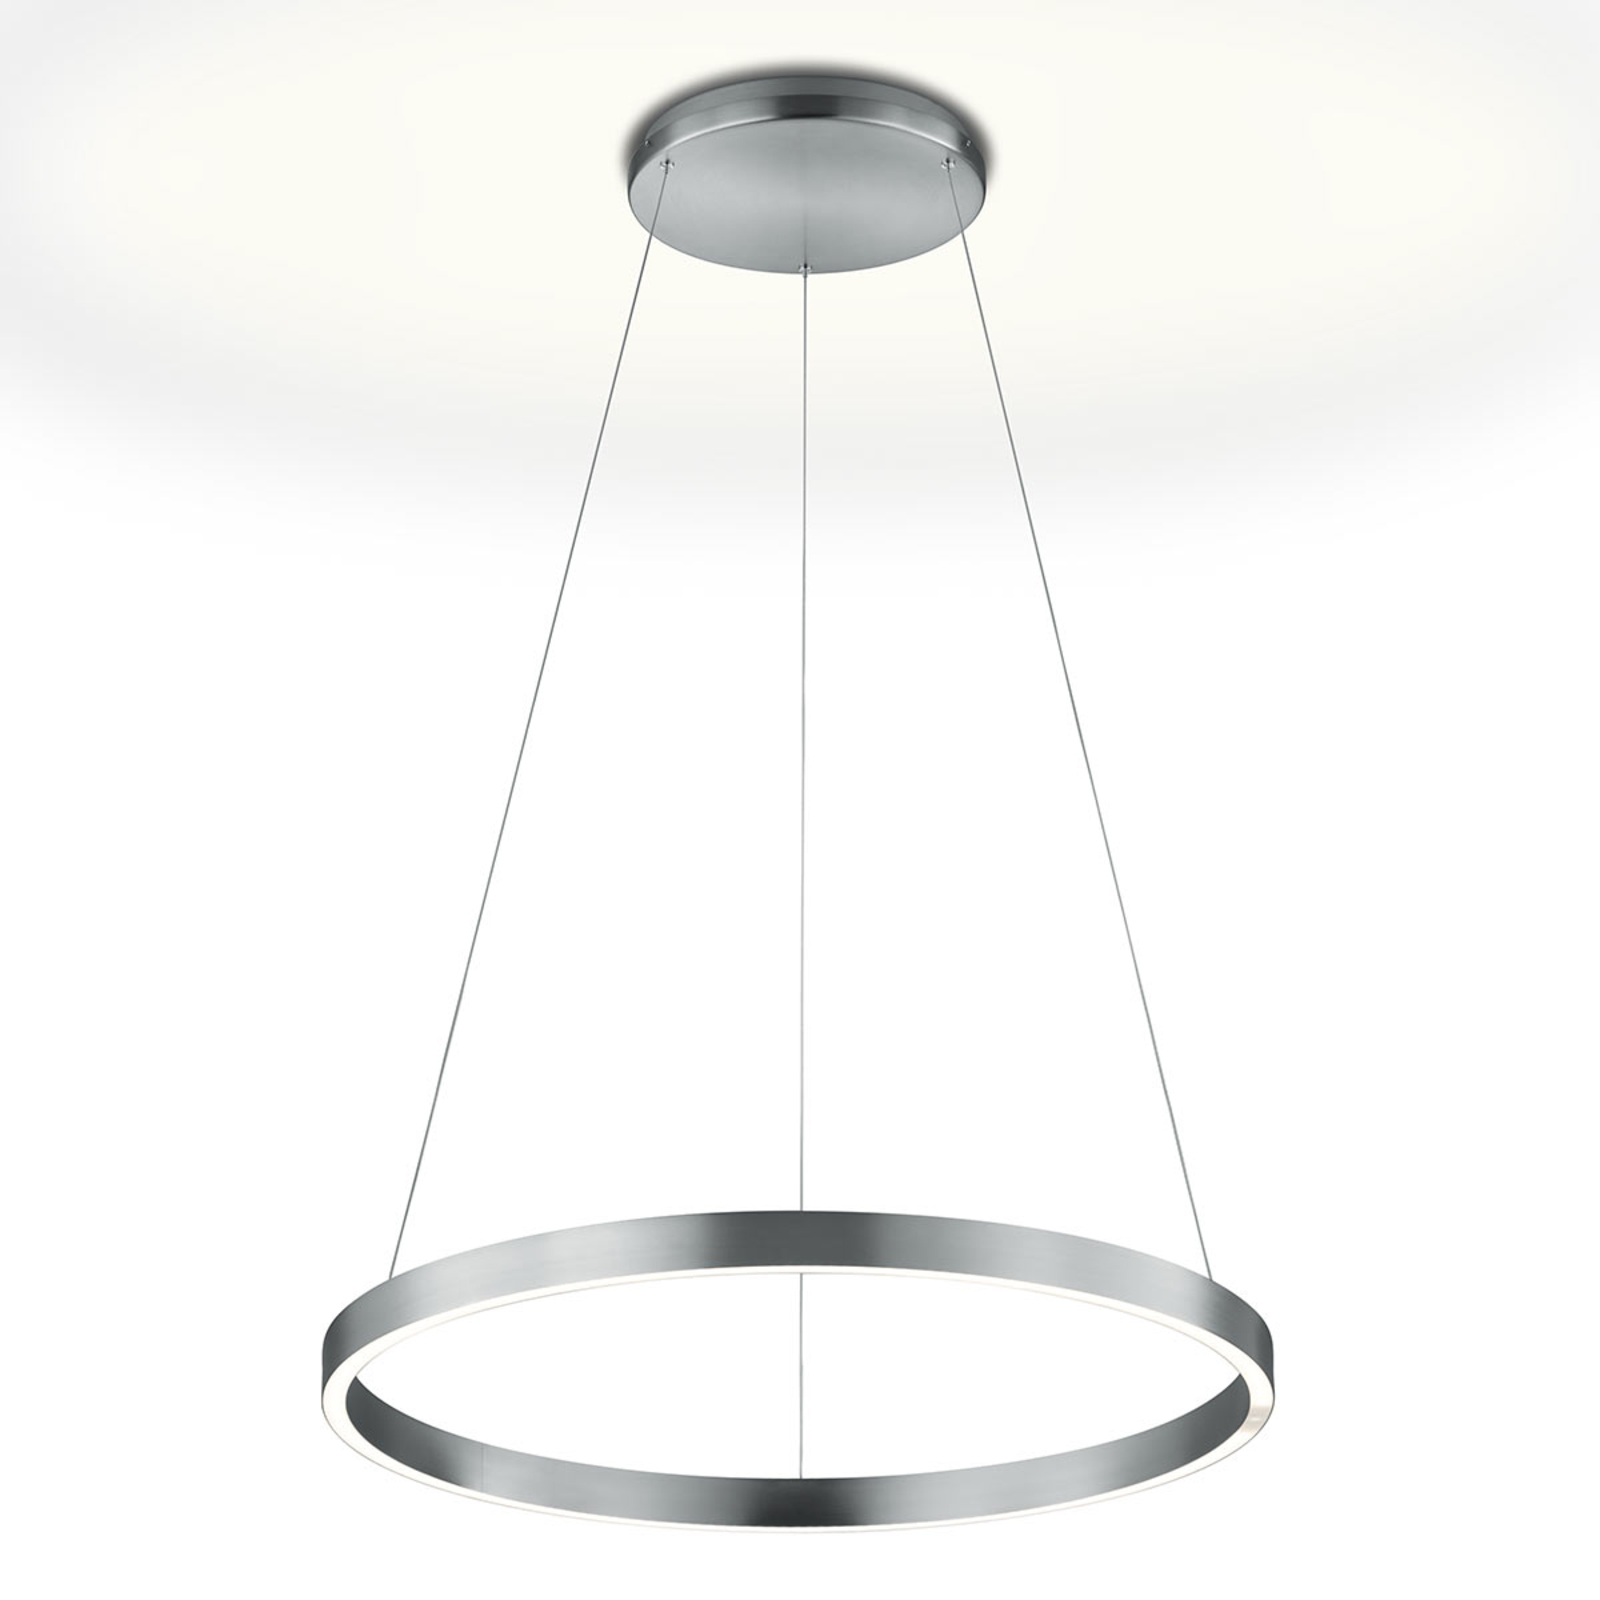 Acteur Dhr Toestand Met gebarensturing - ronde LED hanglamp Circle | Lampen24.nl